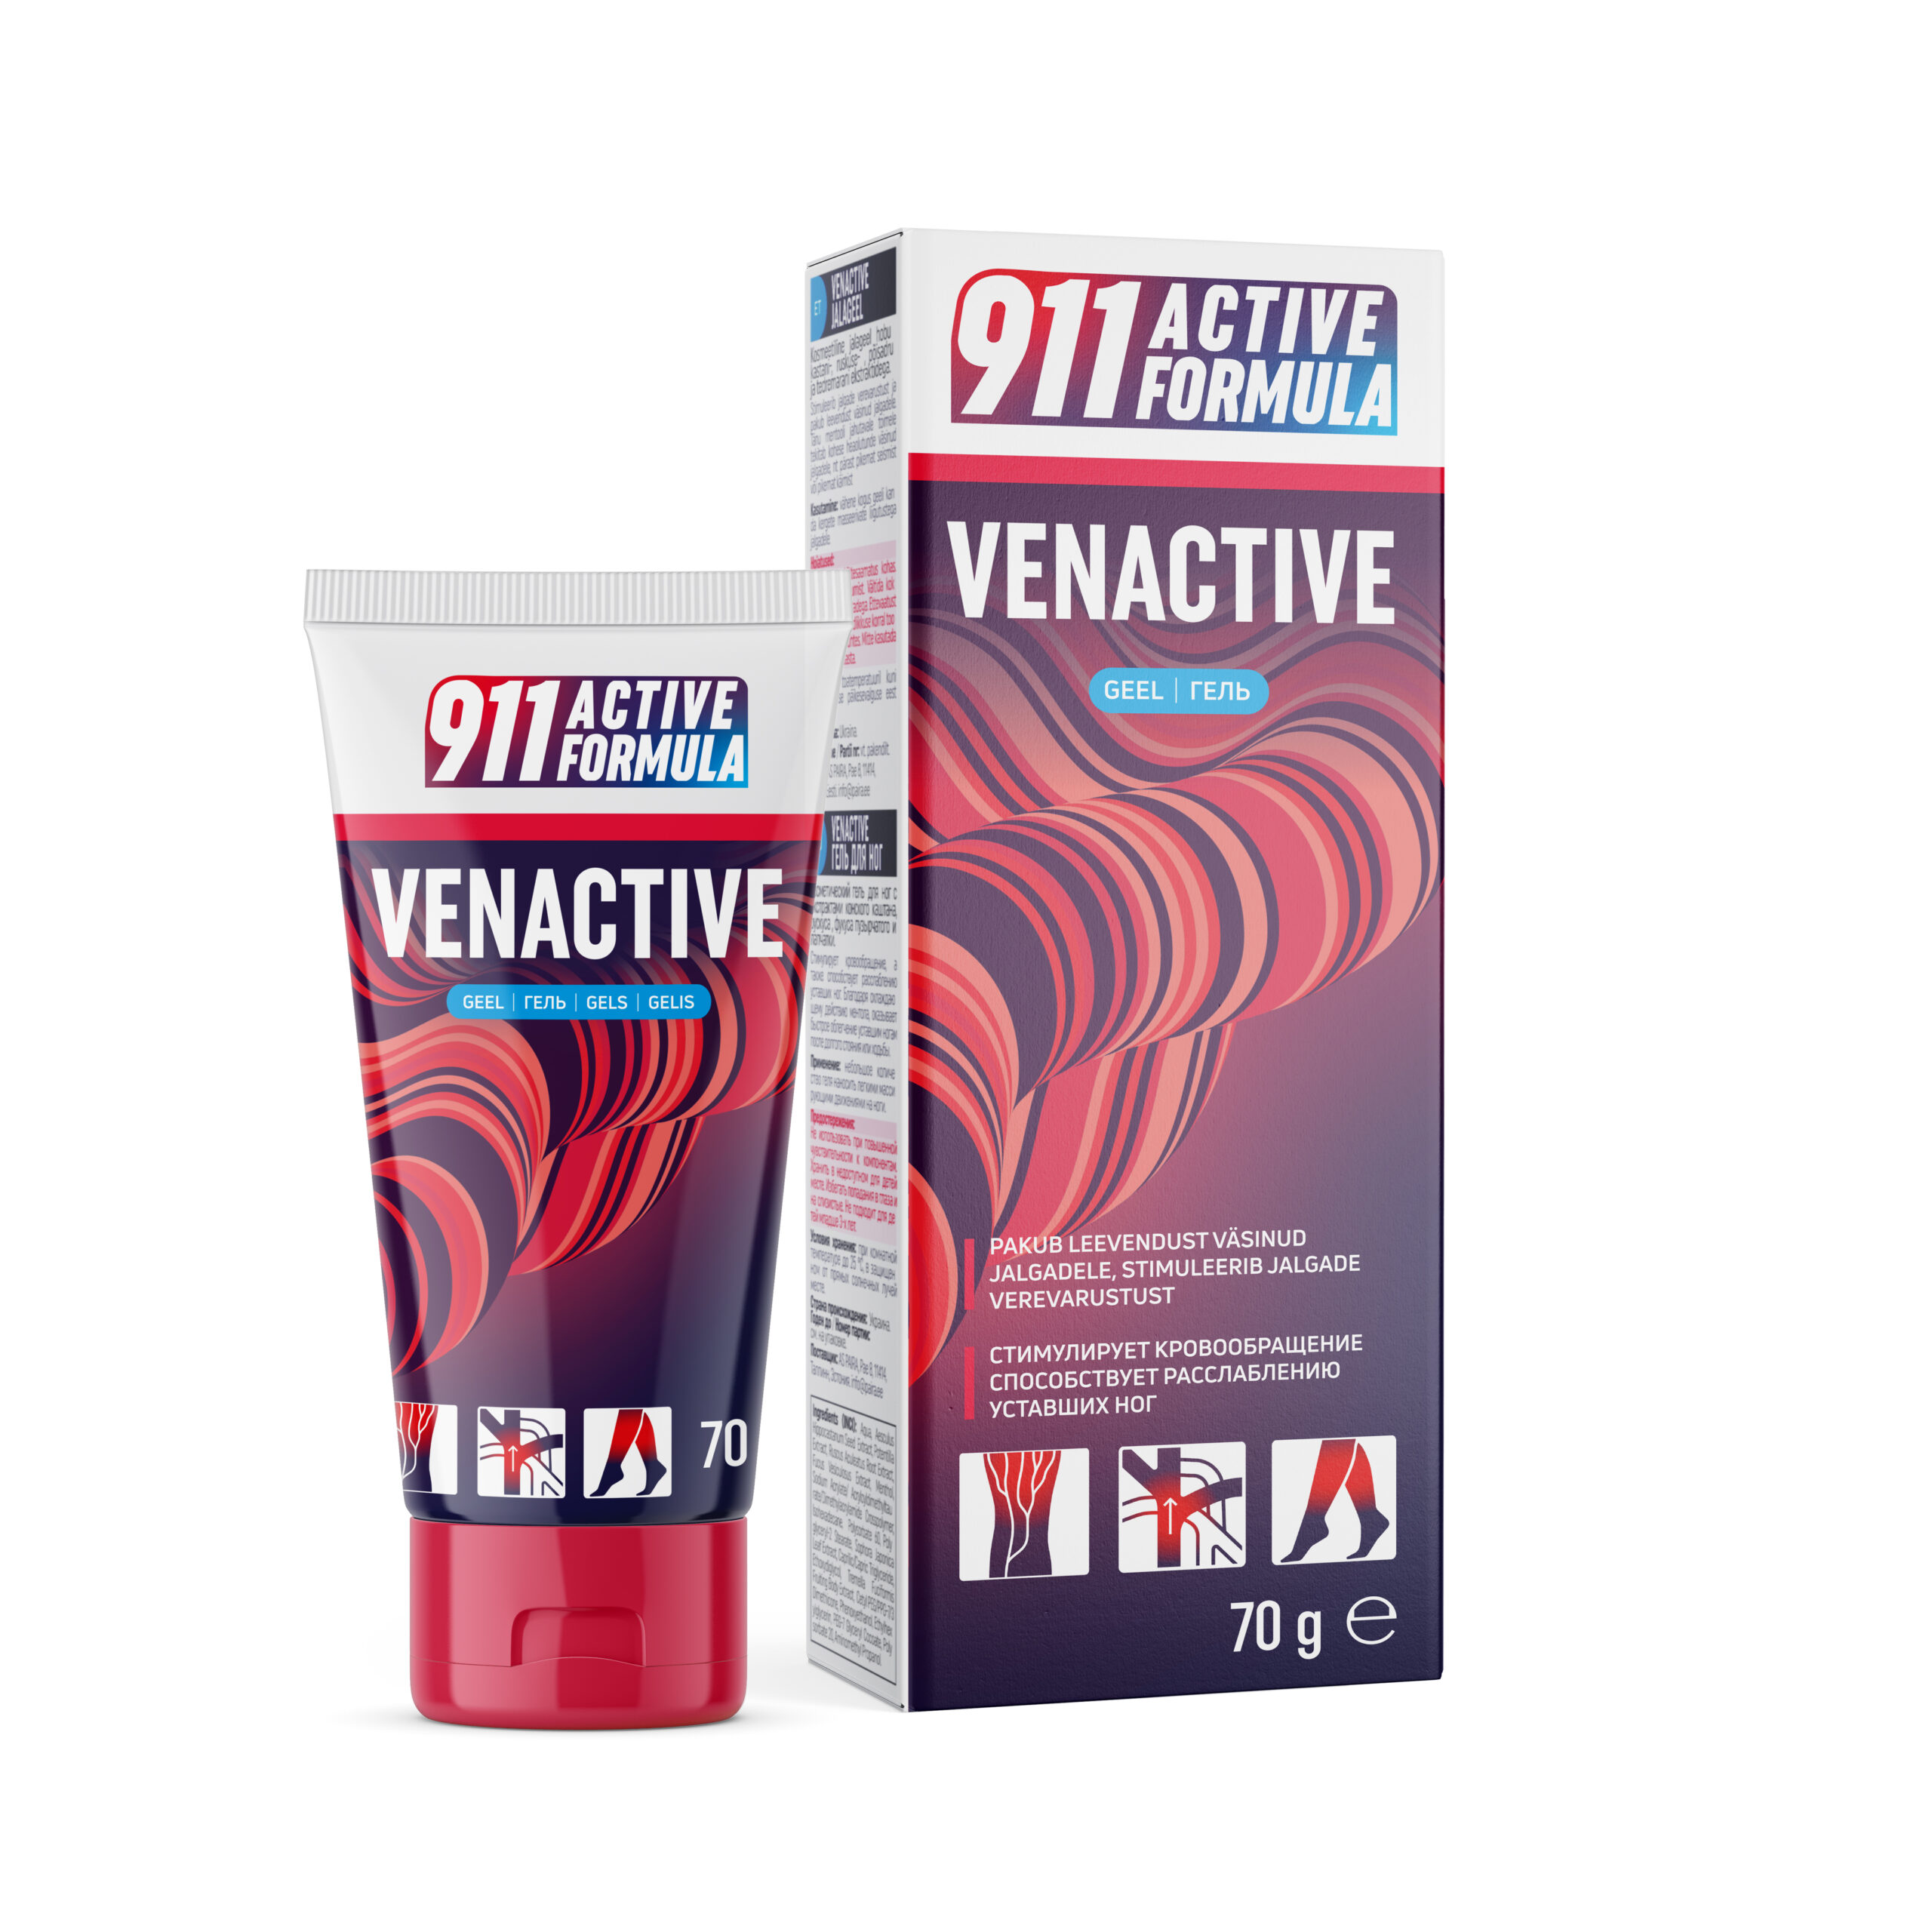 911-Active-Formula-Veactive-RU-ET